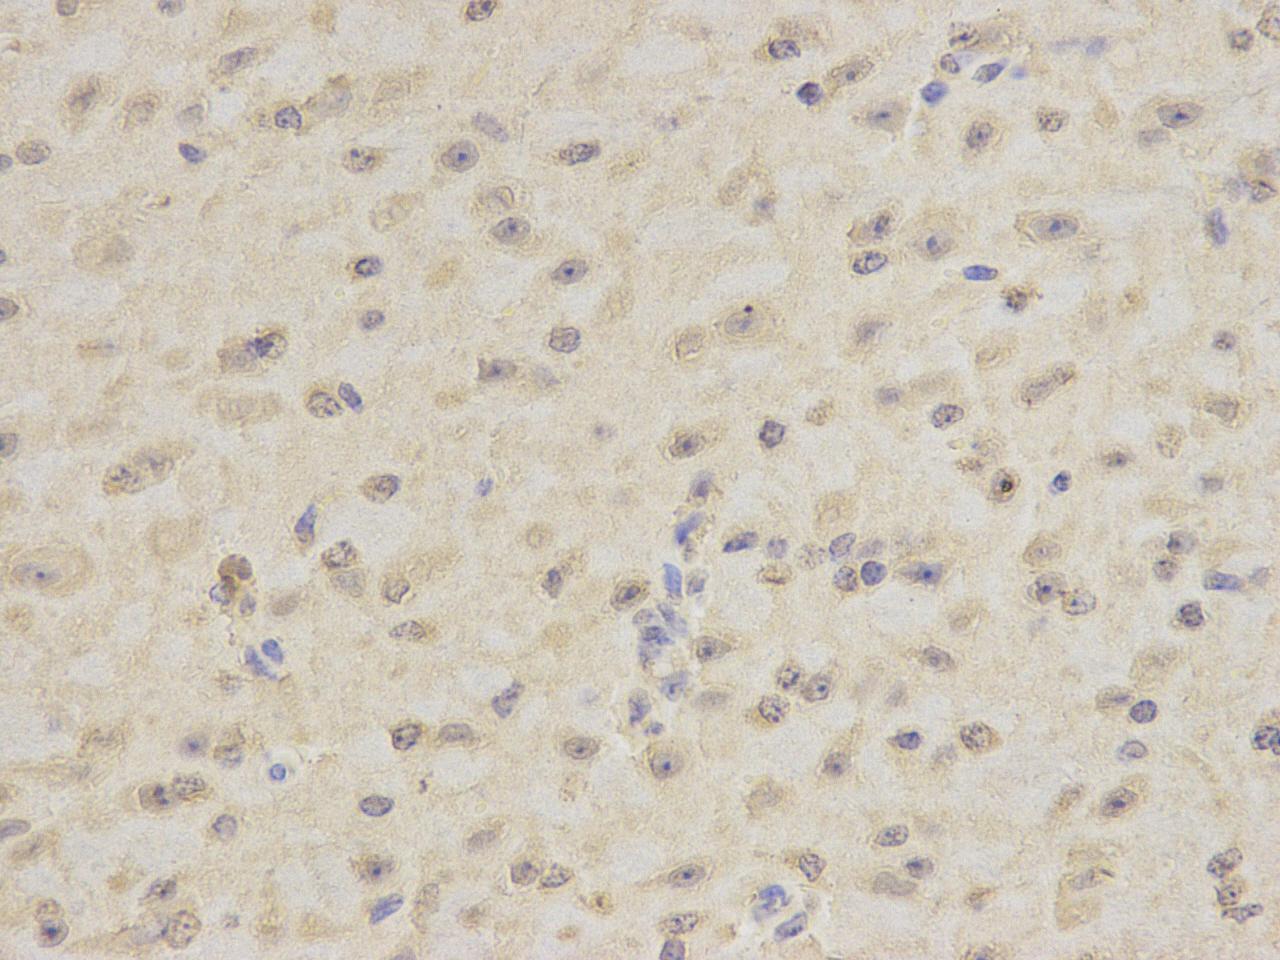 Fig4: Immunohistochemical analysis of paraffin-embedded mouse brain tissue using anti-DPY30 rabbit polyclonal antibody.